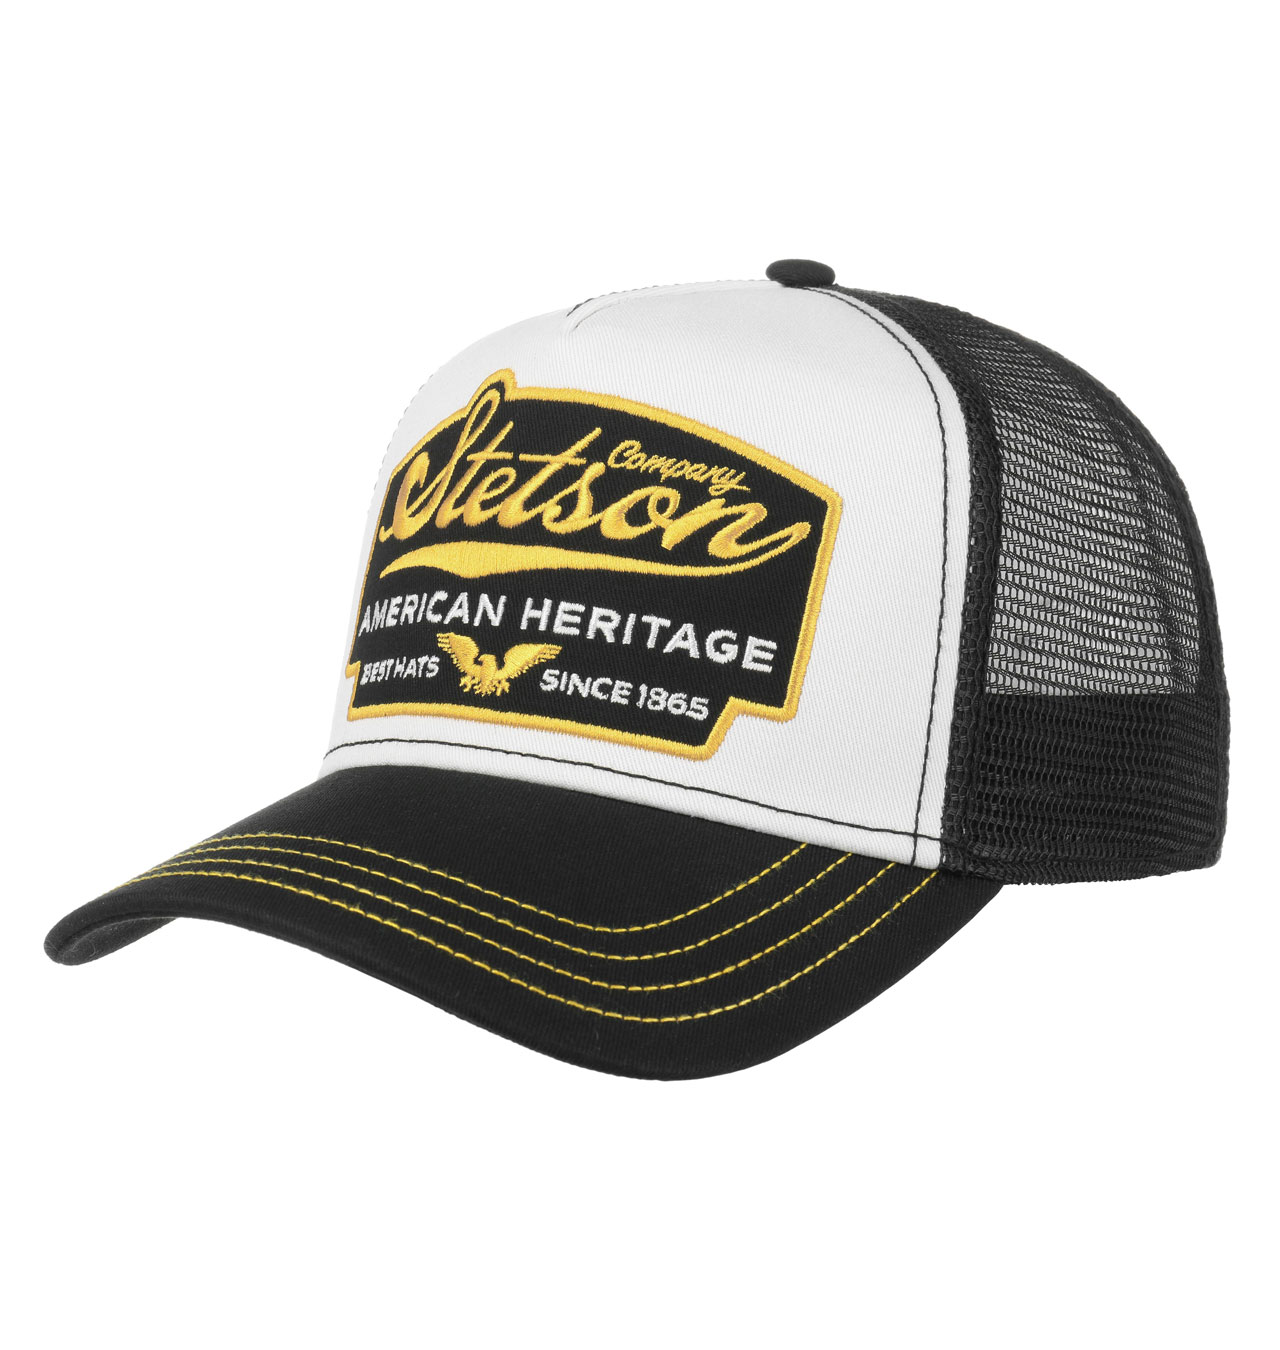 STETSON Highway Trucker Cap Small Basecap Baseballcap Meshcap Snapback